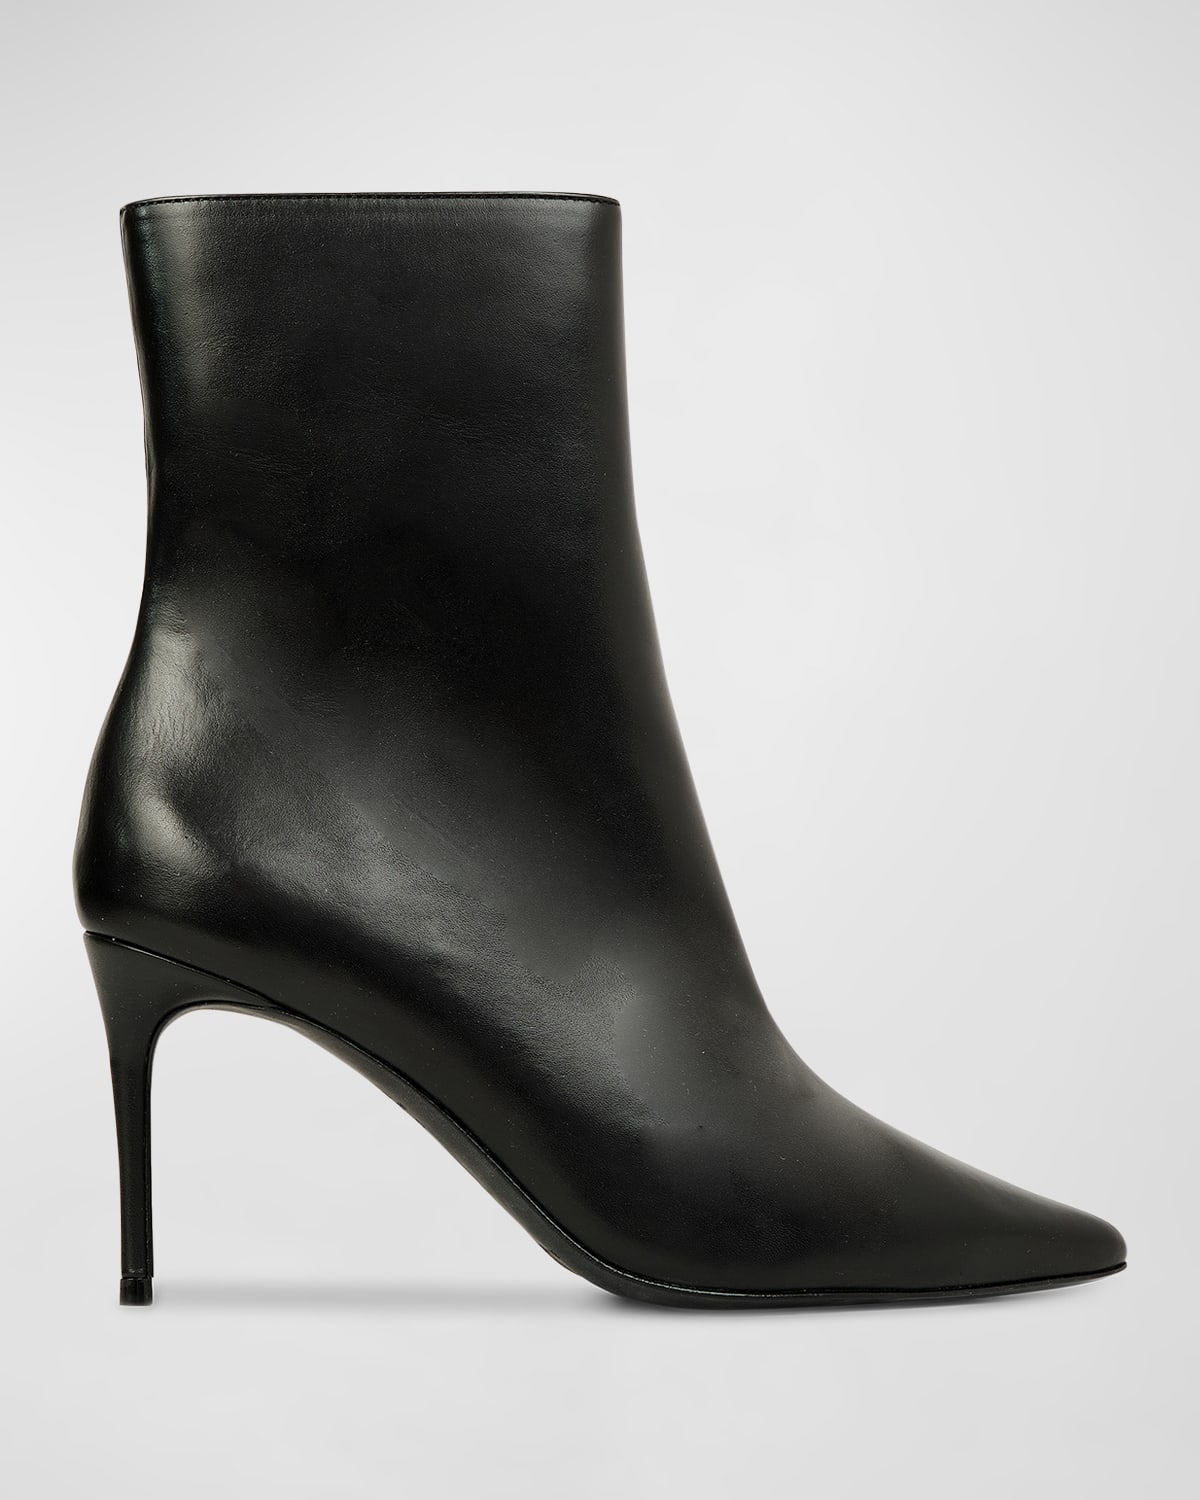 Dahlia Leather Stiletto Ankle Boots